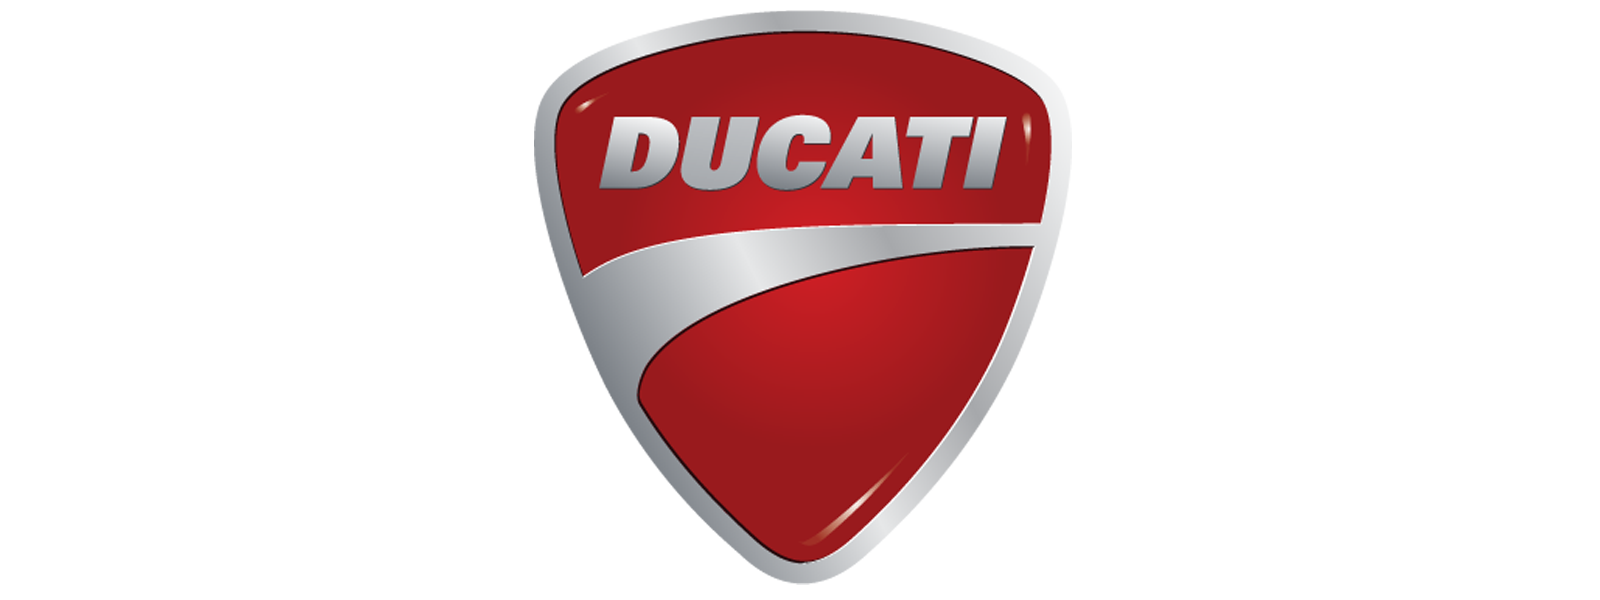 Ducati Logotype PNG - 106270